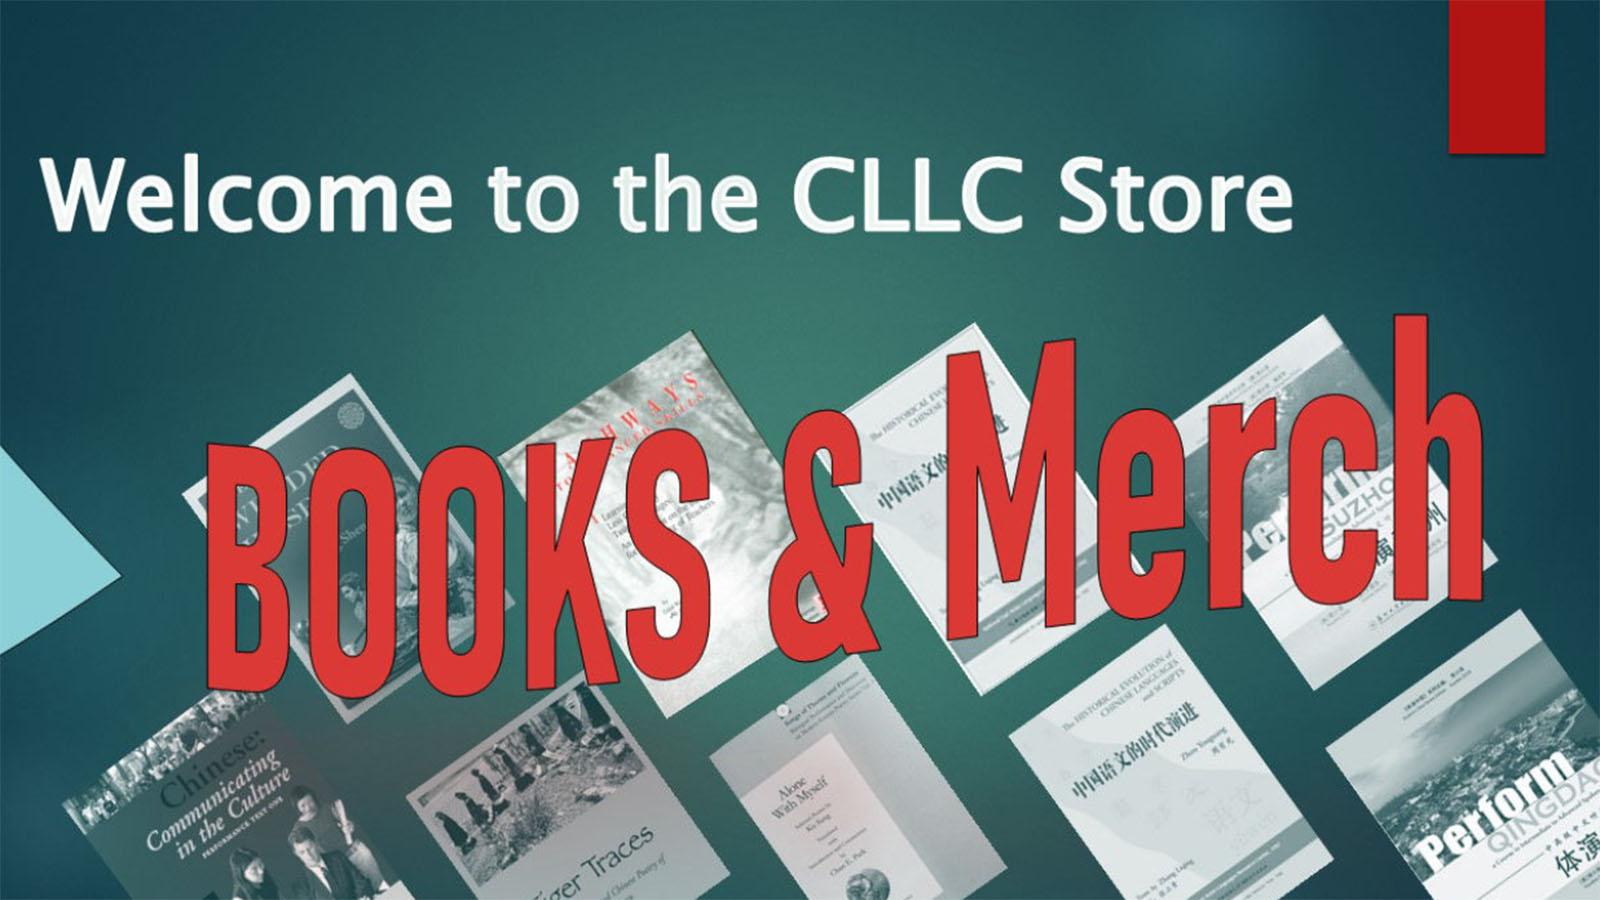 CLLC Online Store